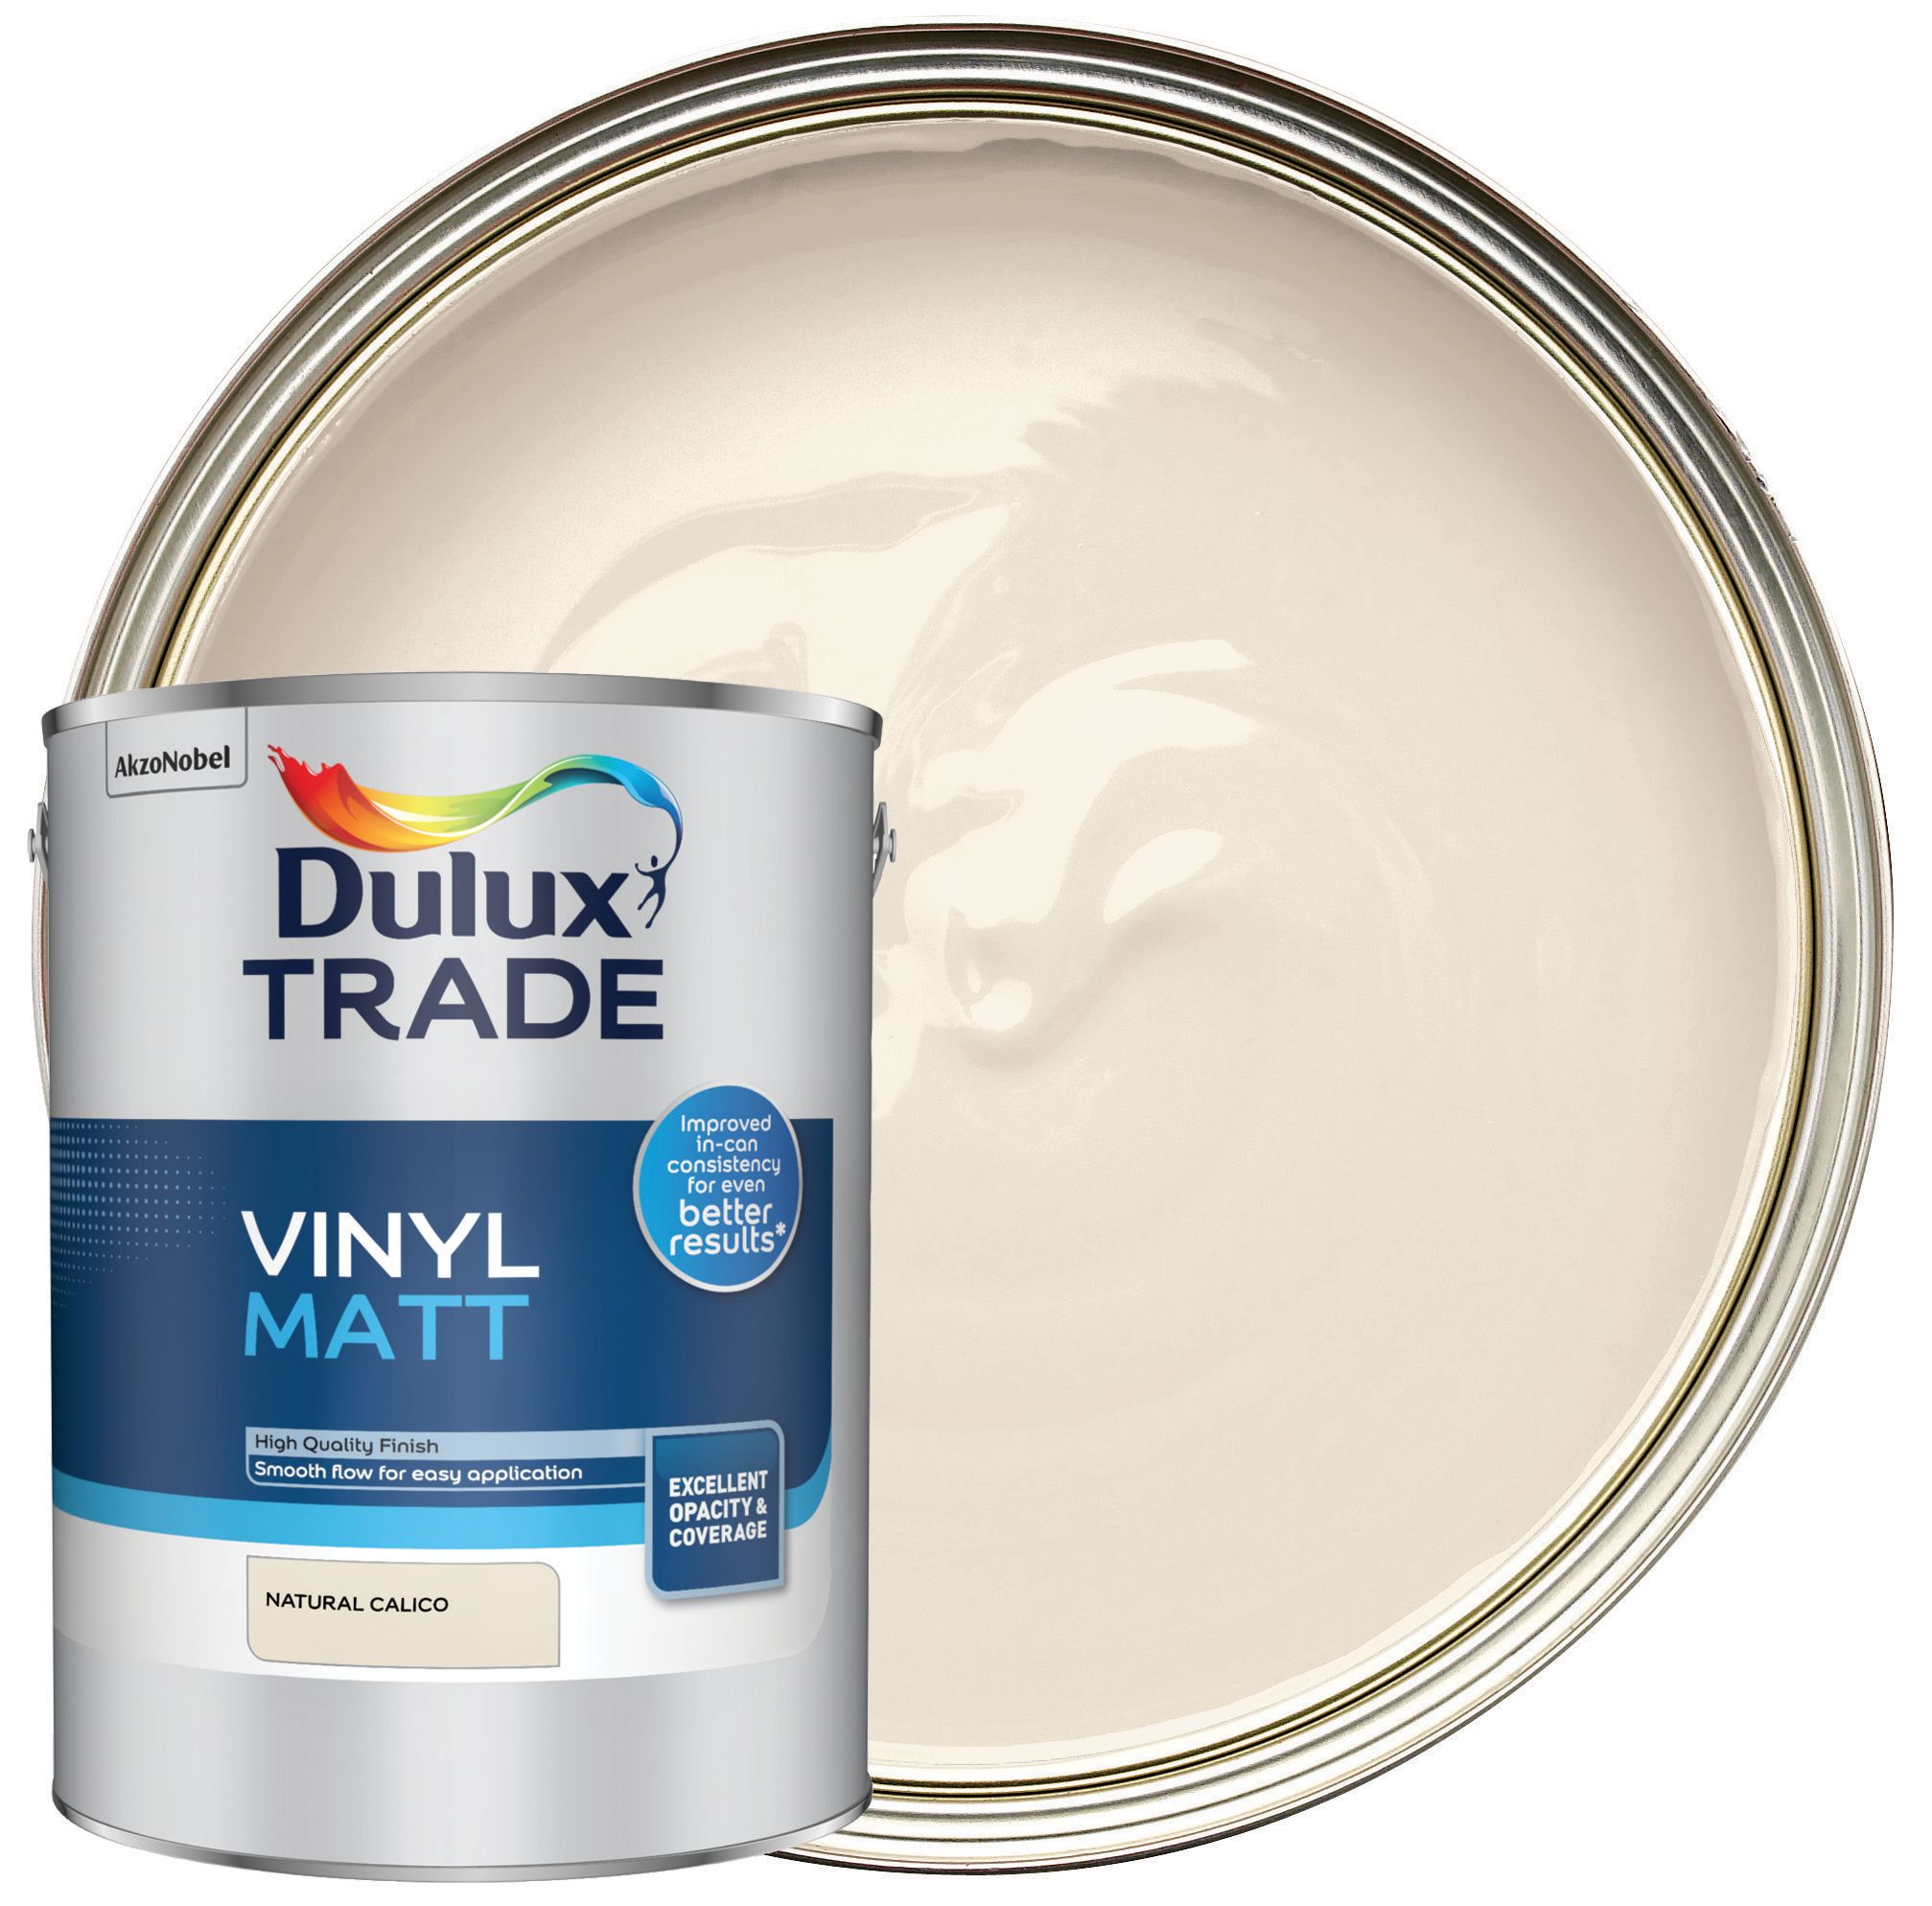 Image of Dulux Trade Vinyl Matt Emulsion Paint - Natural Calico - 5L